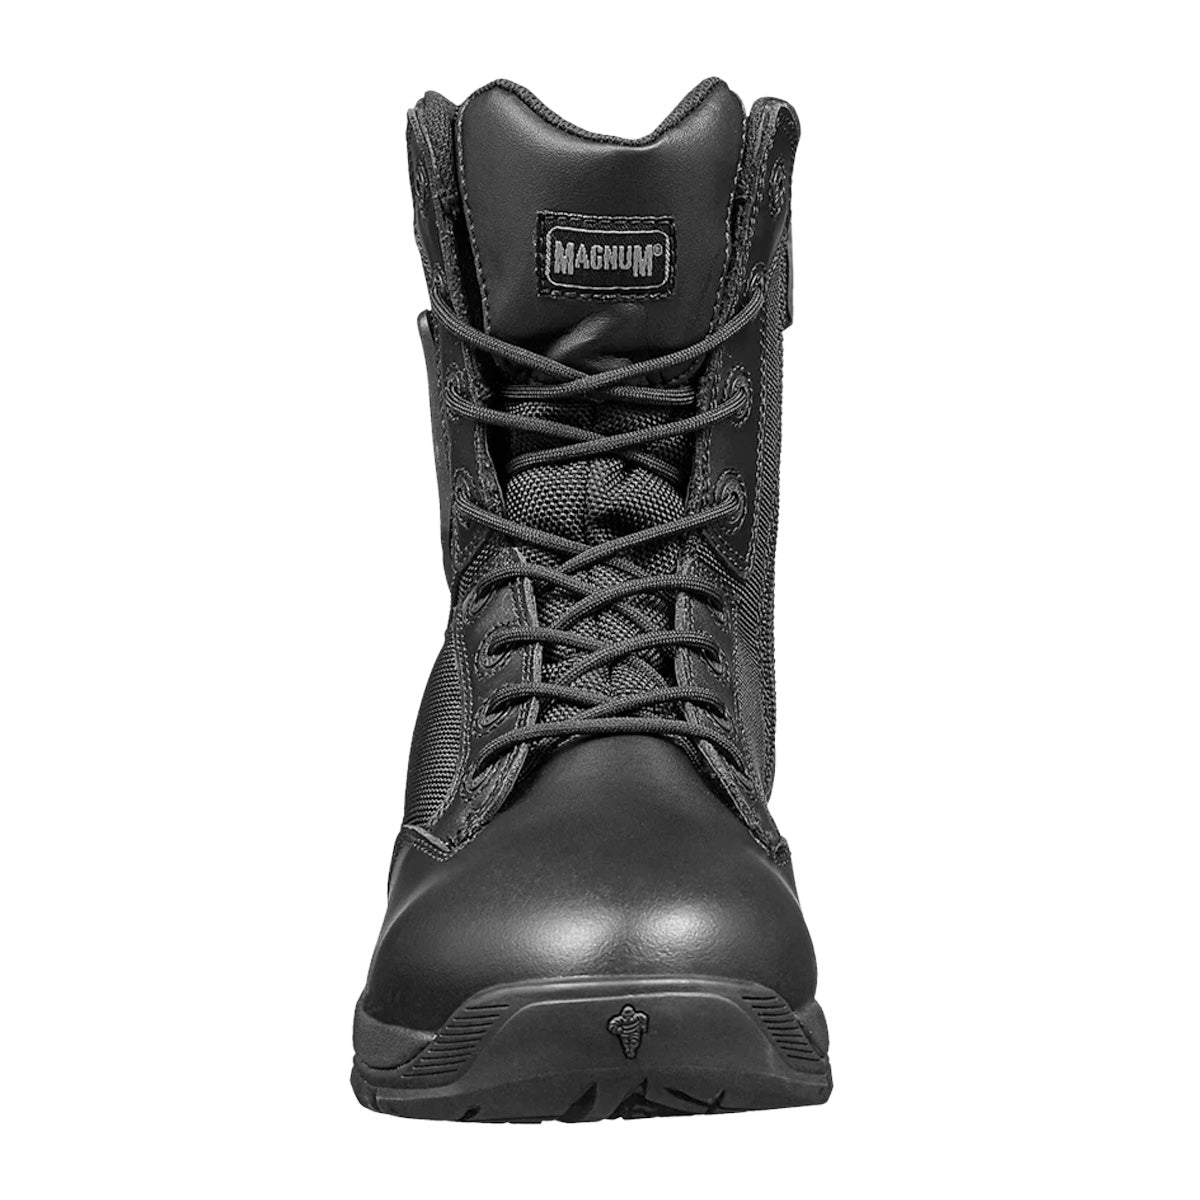 Magnum Strike Force 8.0 Side-Zip Waterproof Women's Boot Black Tactical Distributors Ltd New Zealand